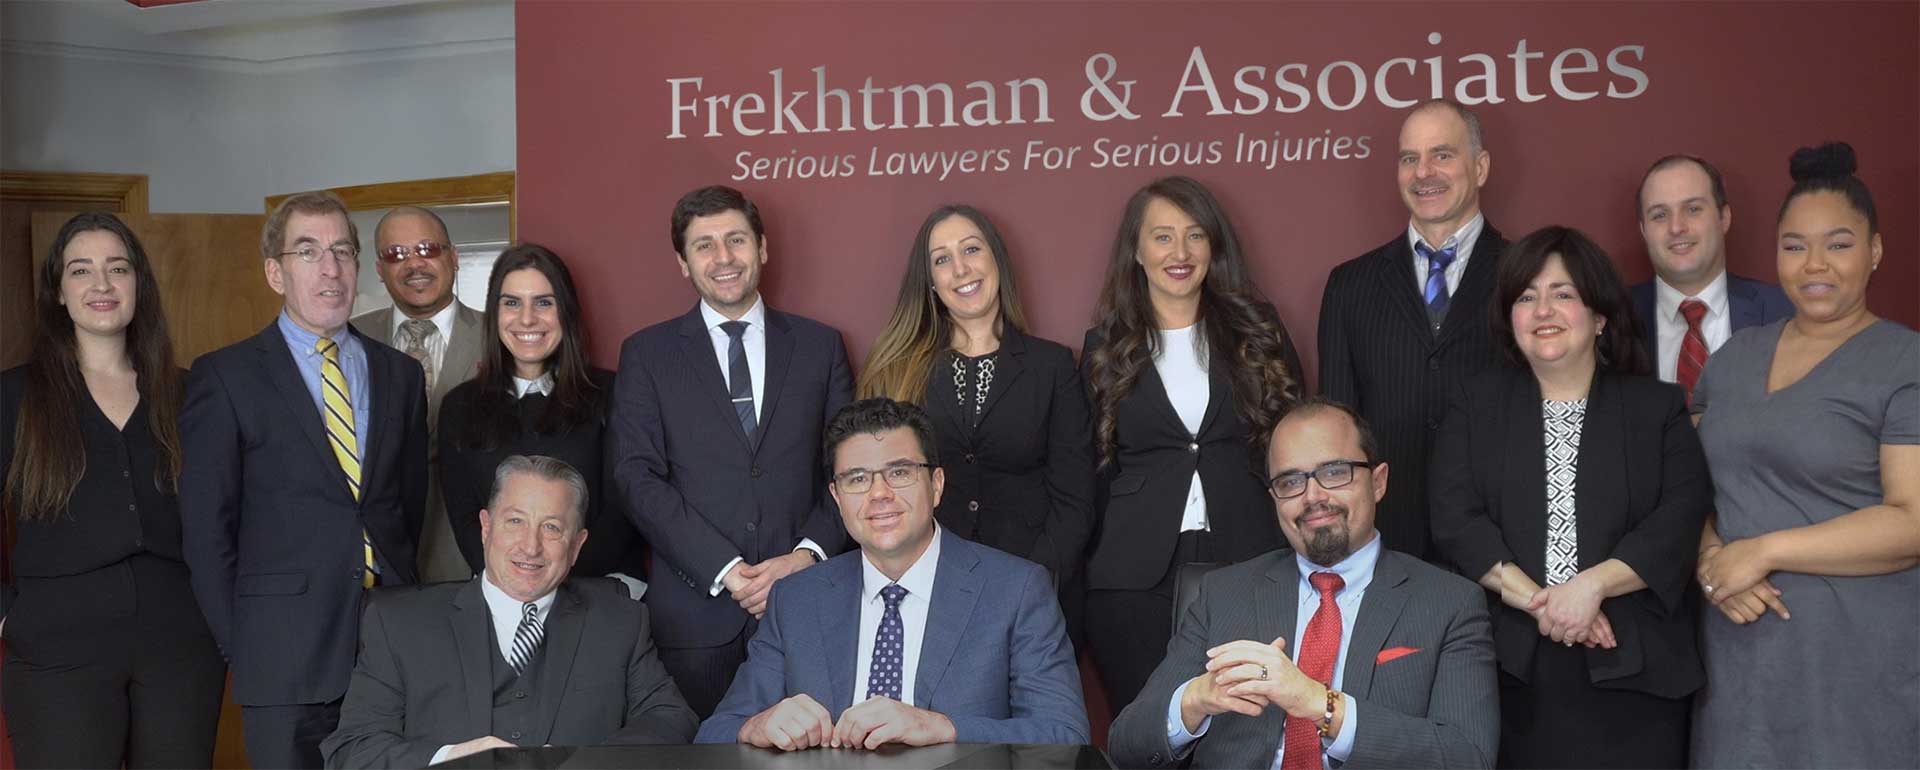 Frekhtman & Associates Injury and Accident Attorneys - Brooklyn (NY 11214), US, medical malpractice